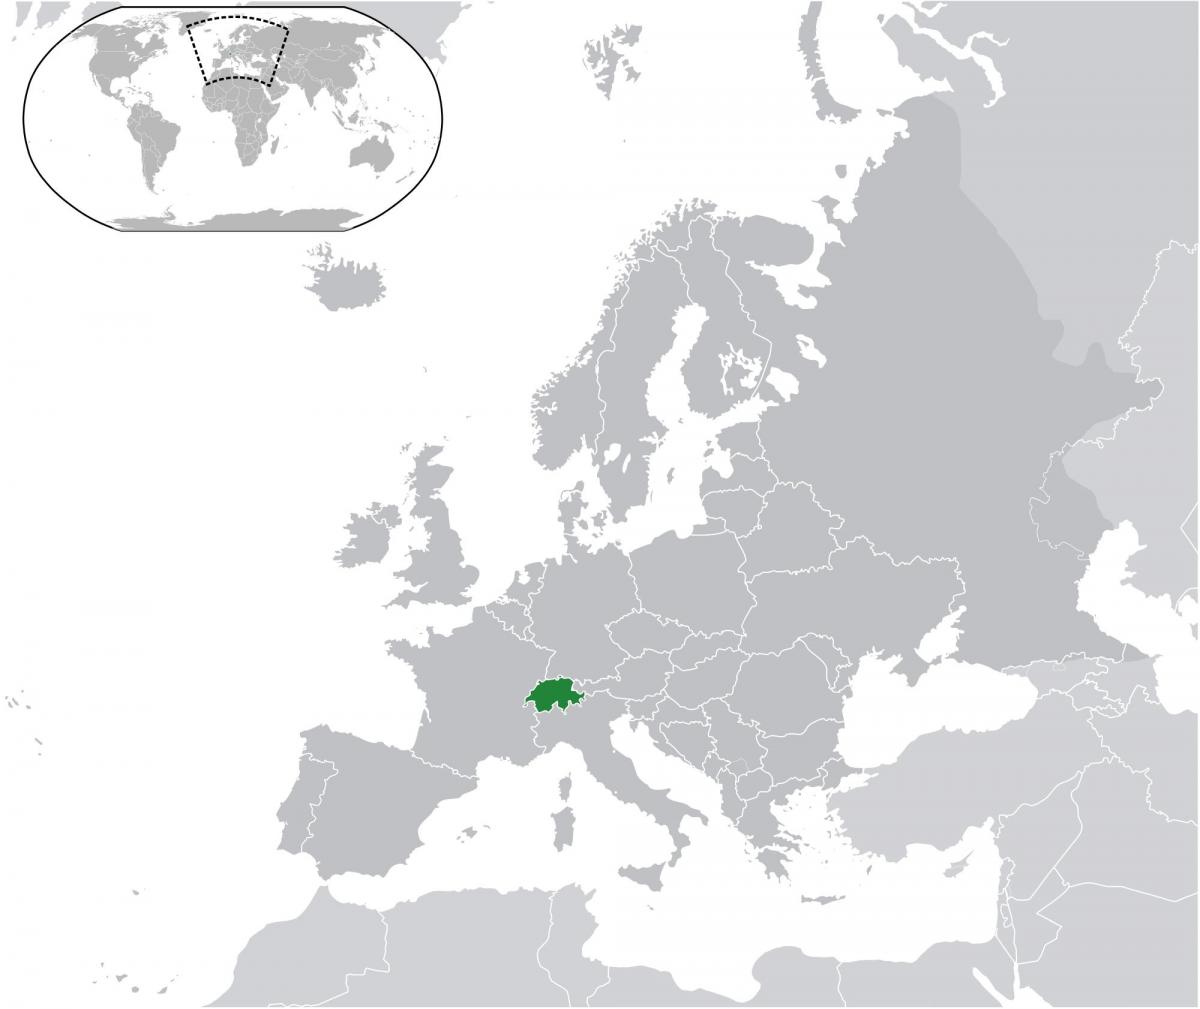 Швейцария на карте мира